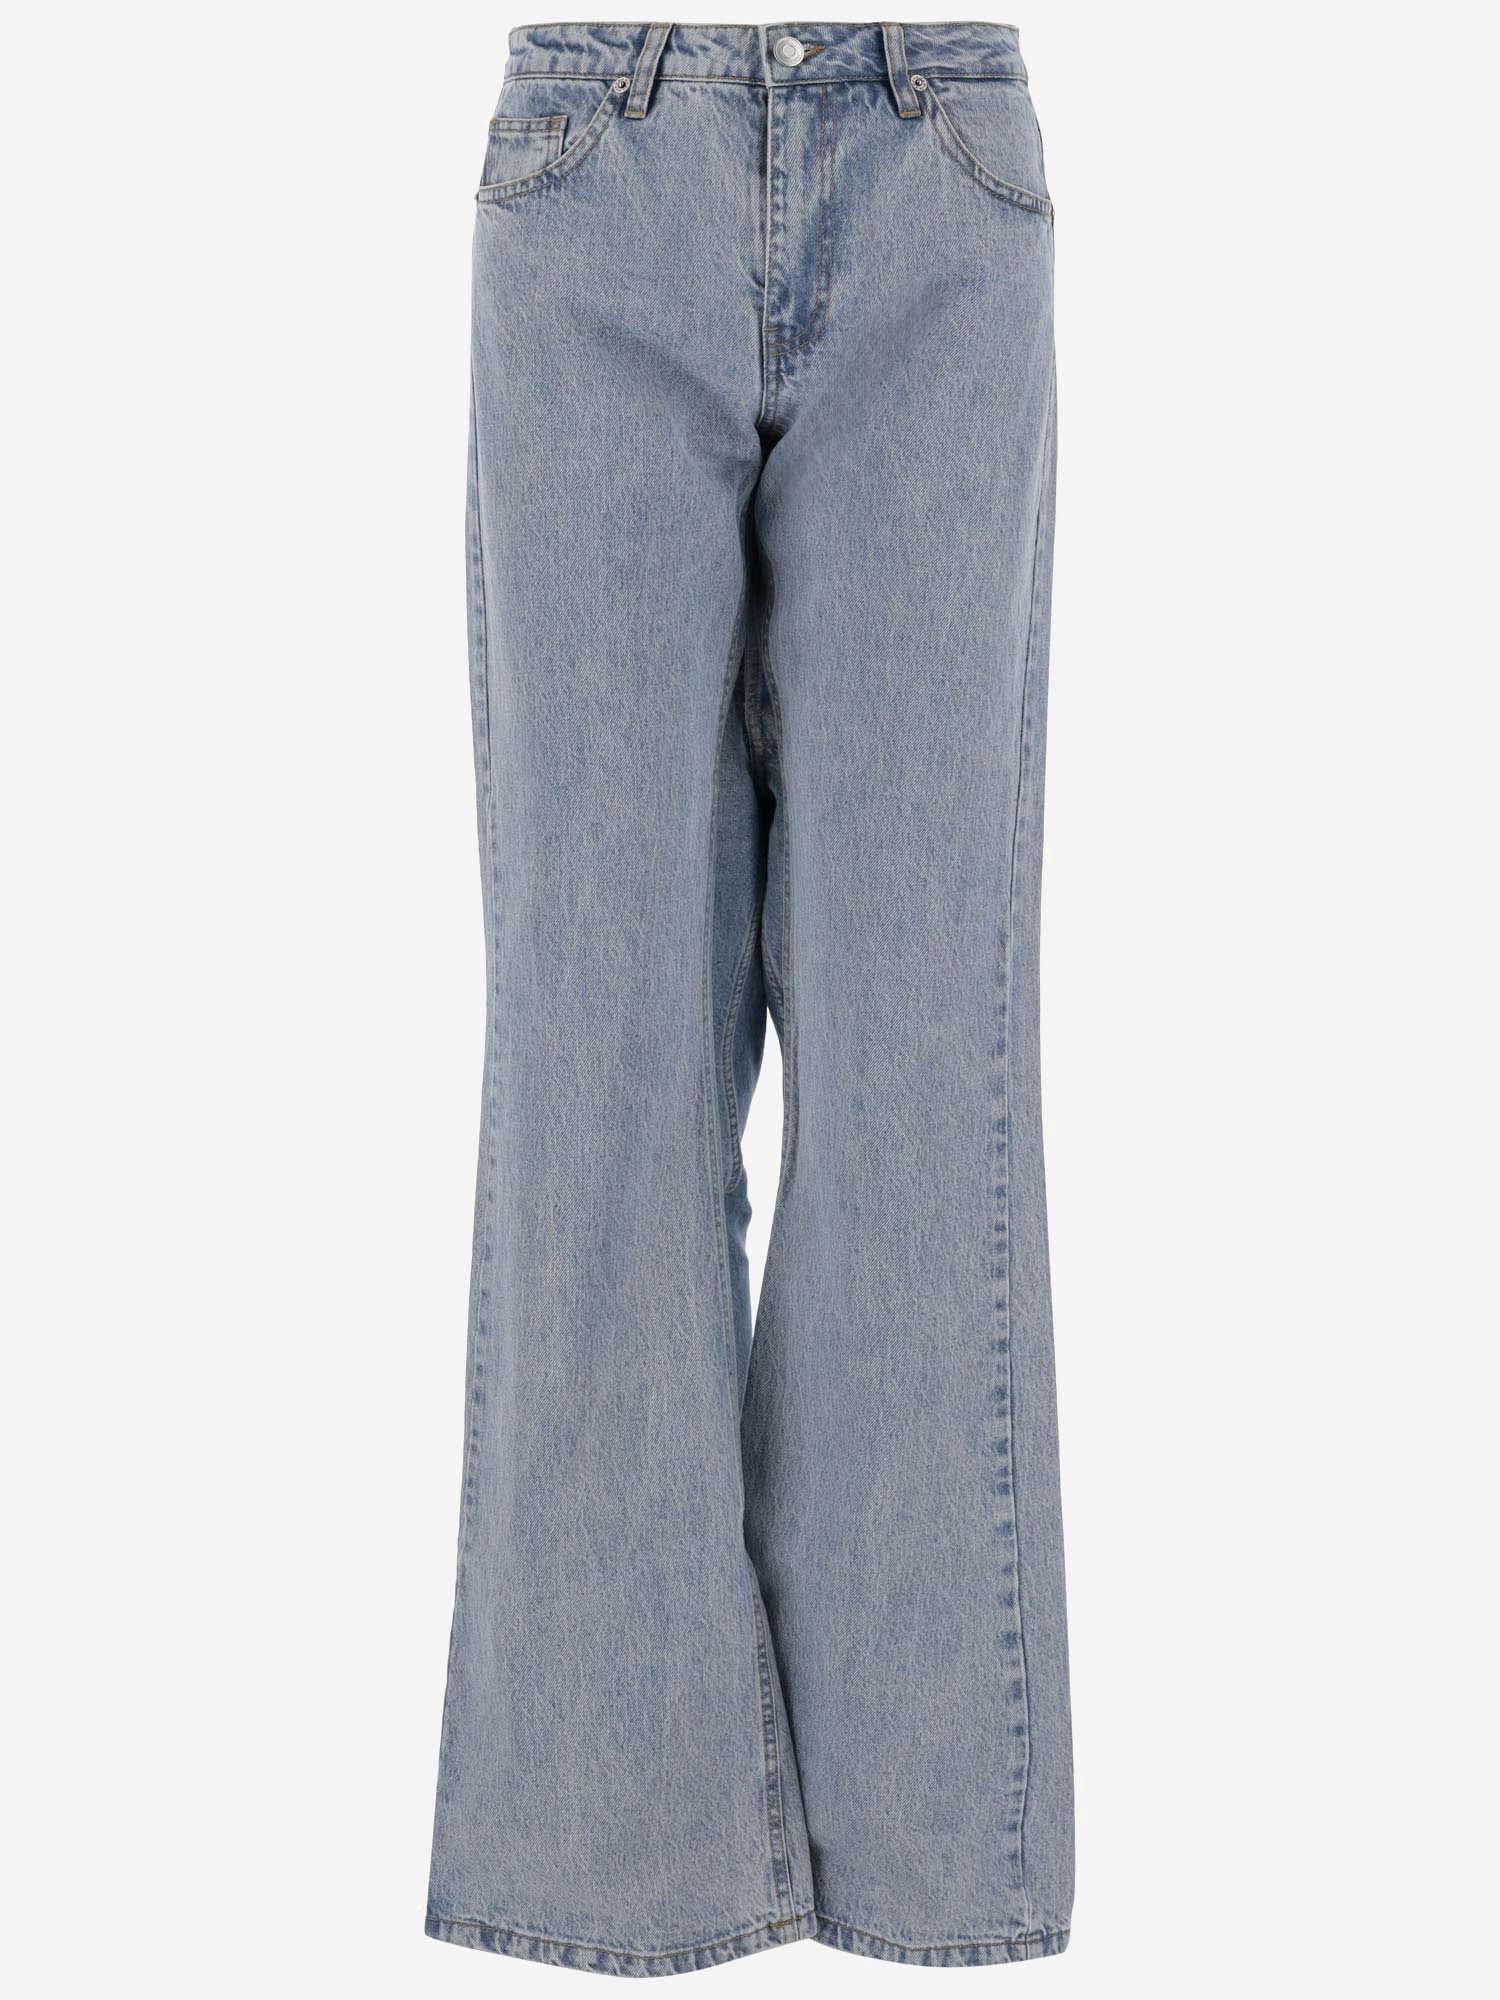 Cotton Denim Flared Jeans